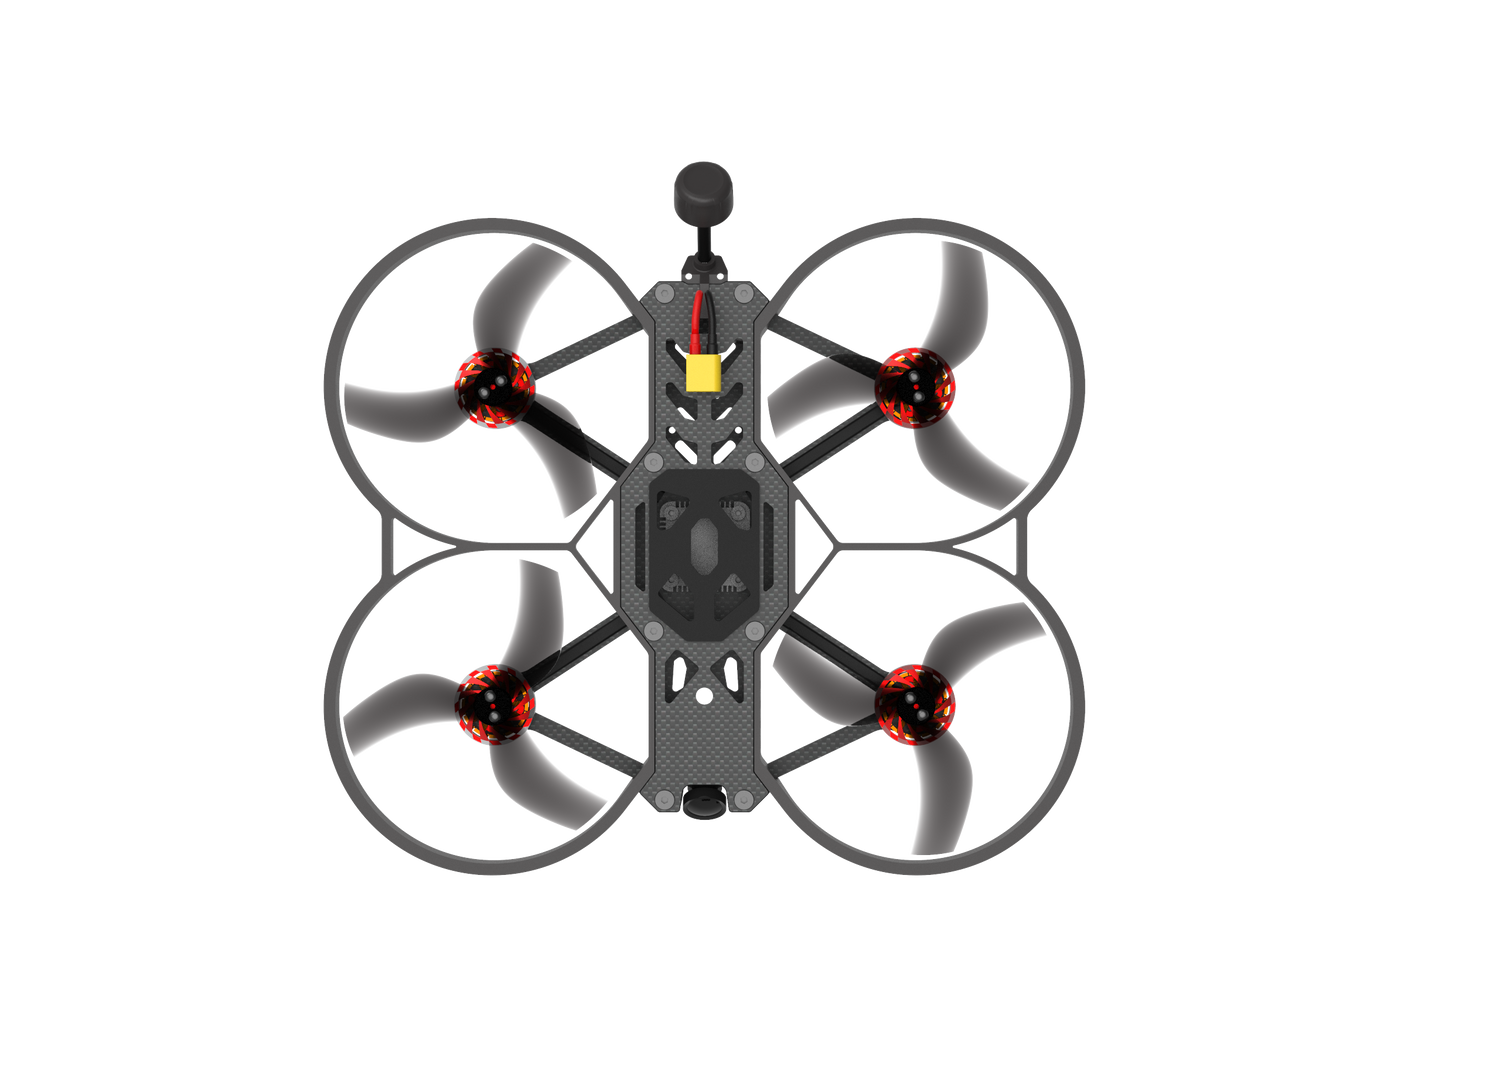 ATOMRC Seagull FPV RC Drone